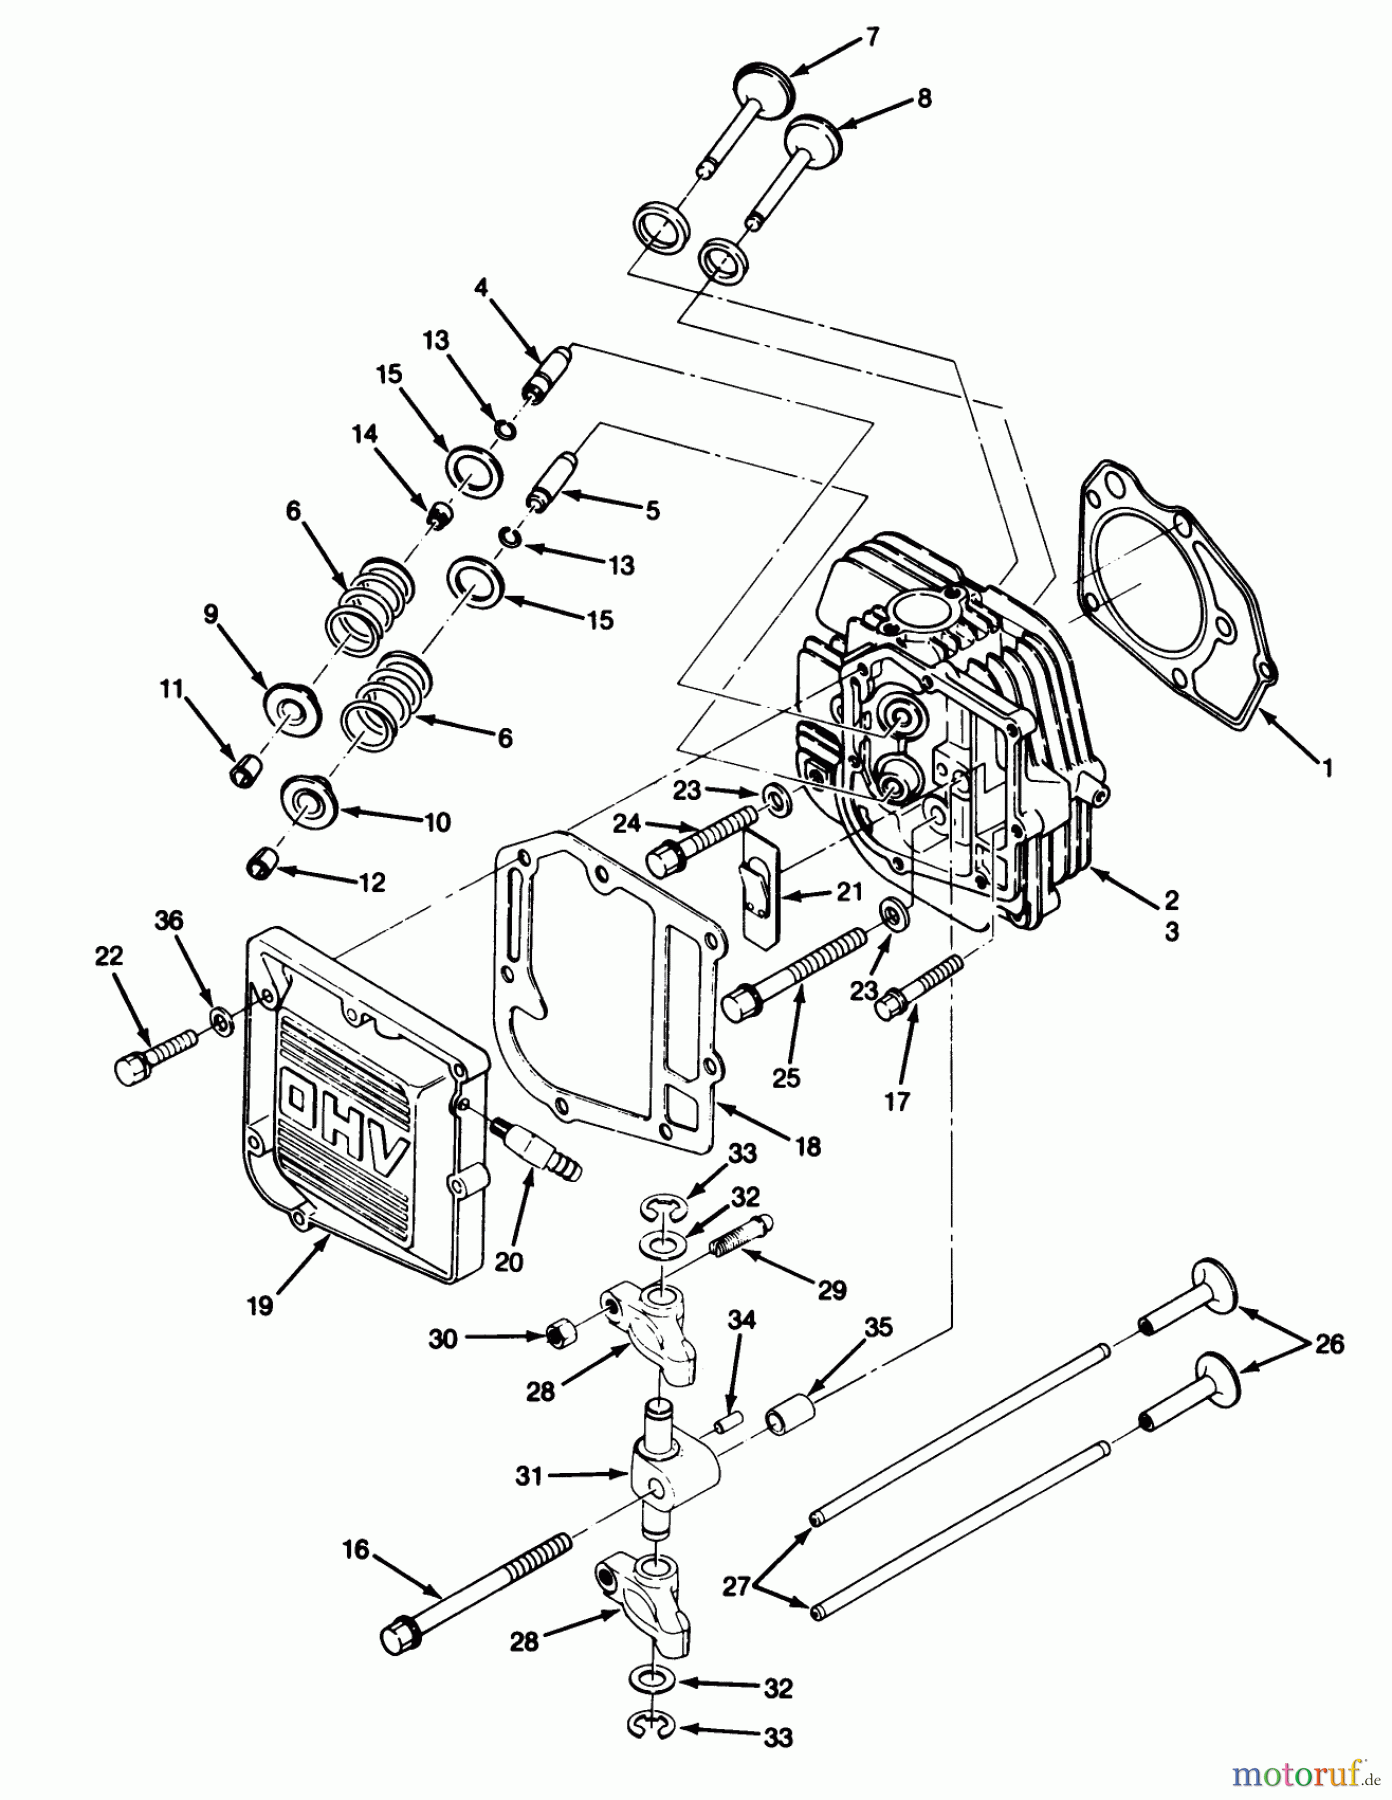  Toro Neu Mowers, Lawn & Garden Tractor Seite 1 32-12O501 (212-5) - Toro 212-5 Tractor, 1990 CYLINDER HEAD AND VALVES